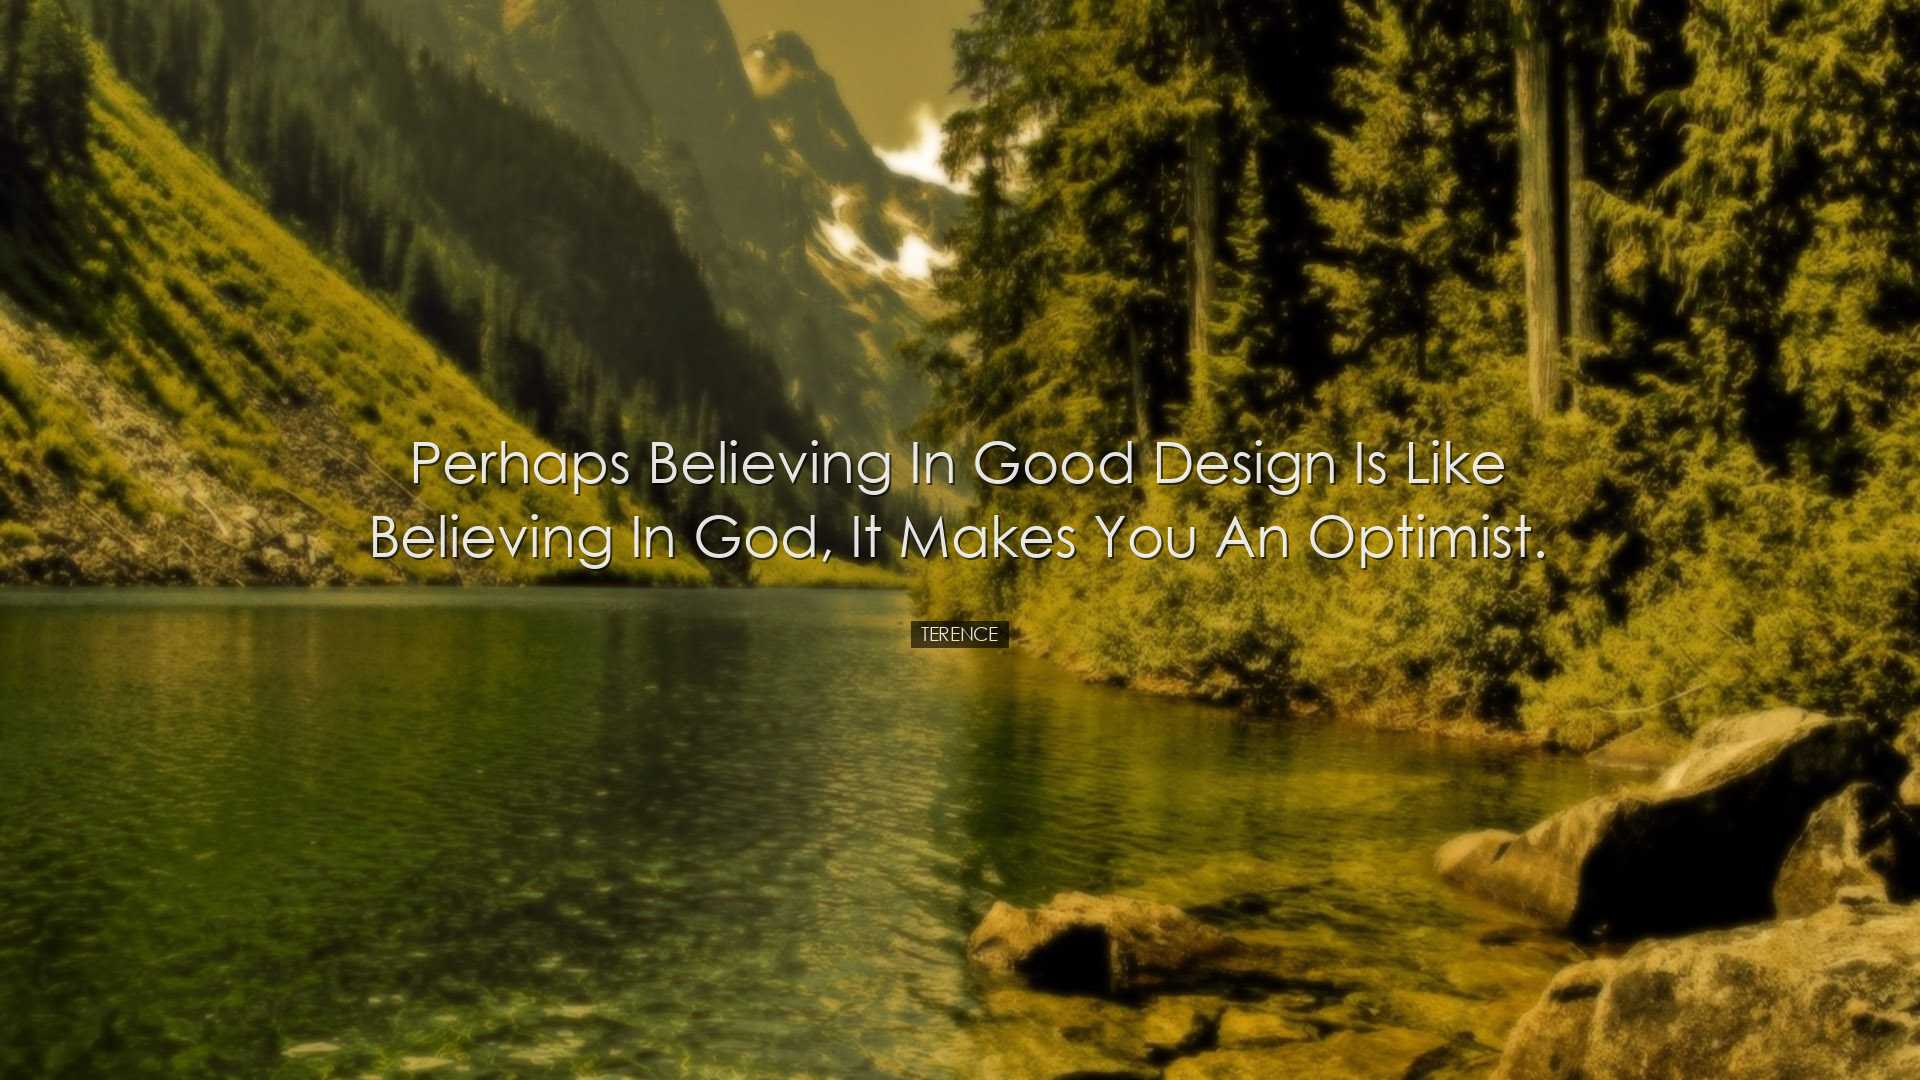 Perhaps believing in good design is like believing in God, it make